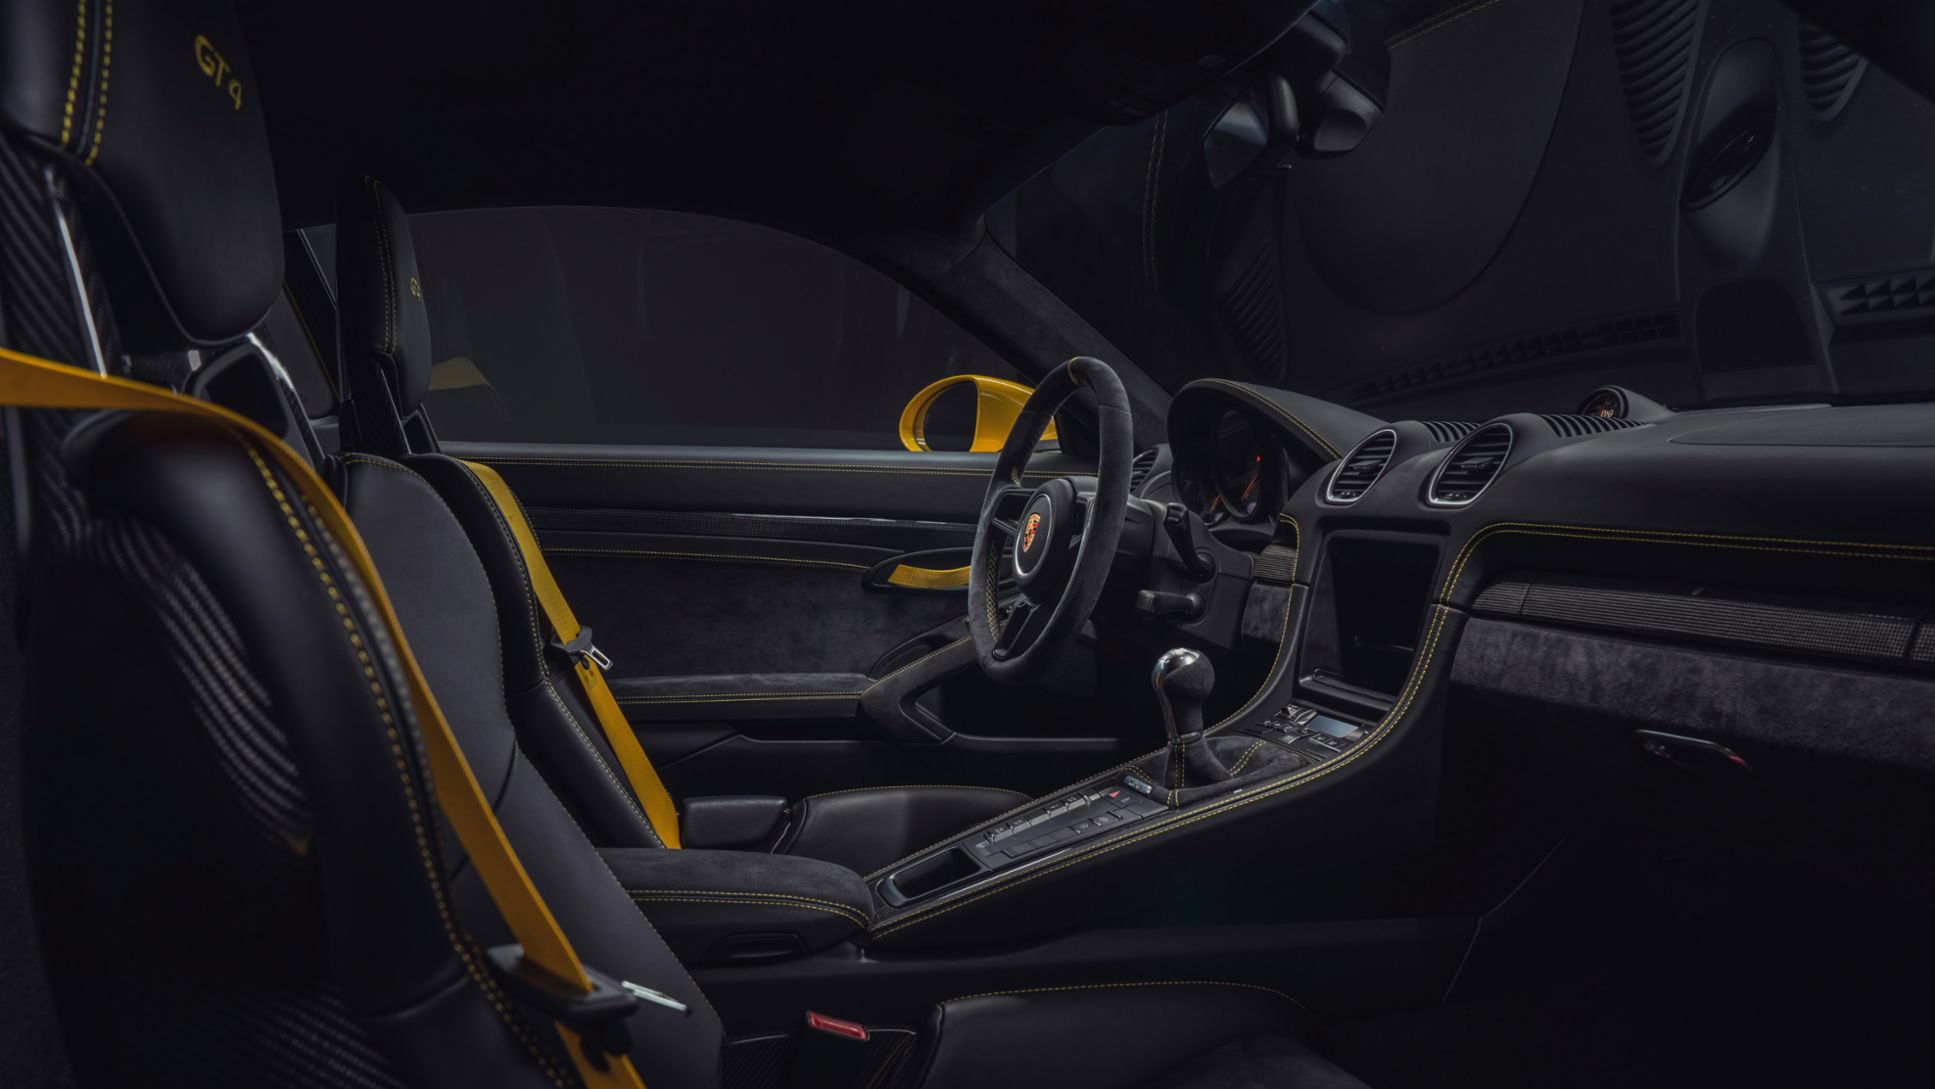 Body and interior - Porsche Newsroom